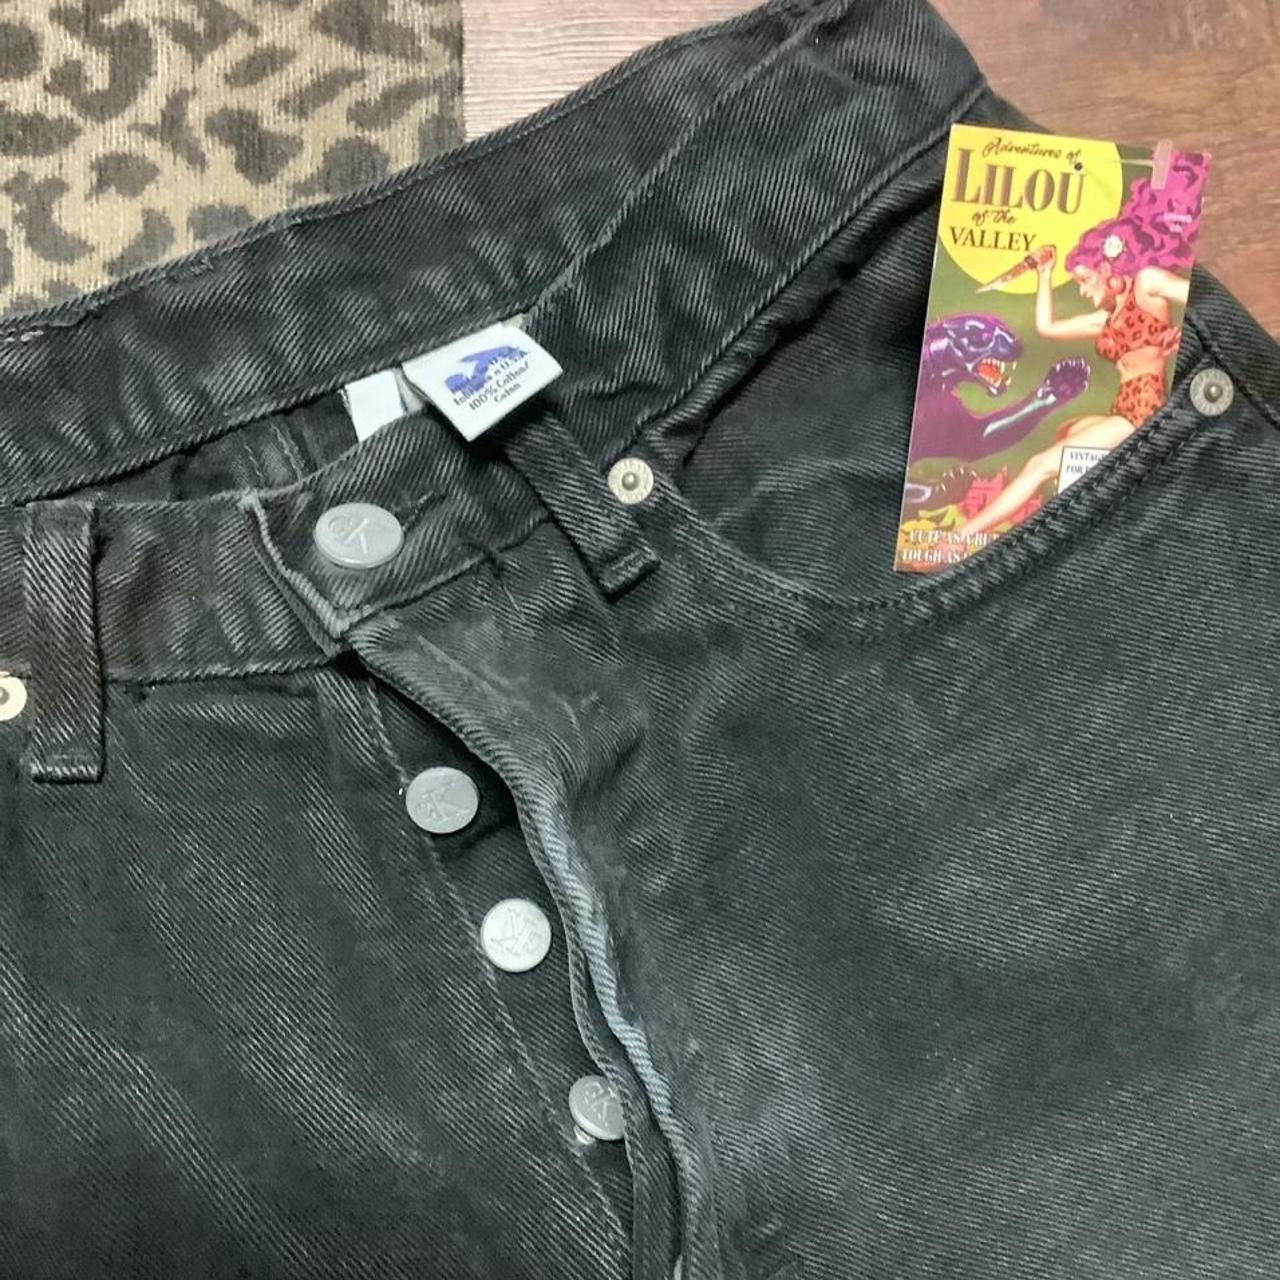 Product Image 1 - Vintage BLack CK jeans.
LabeLed Size: